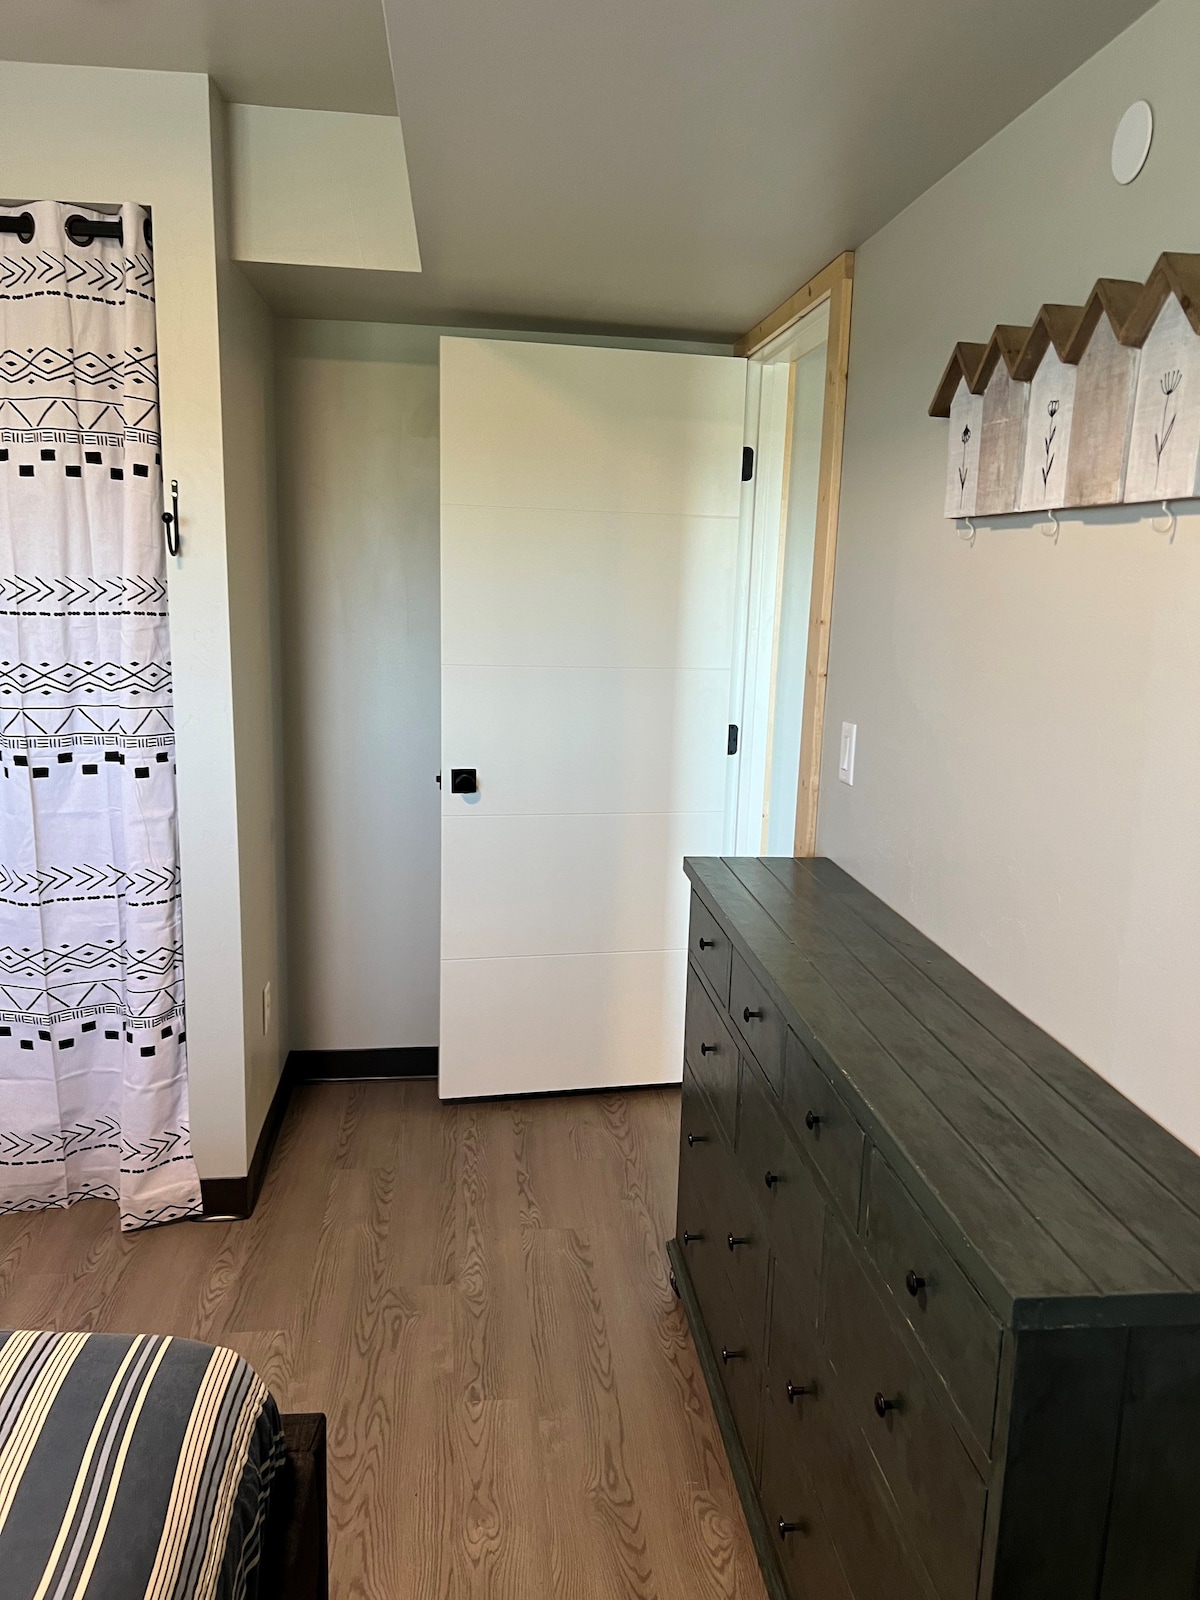 Brand new modern 2-bedroom condo in Rexburg